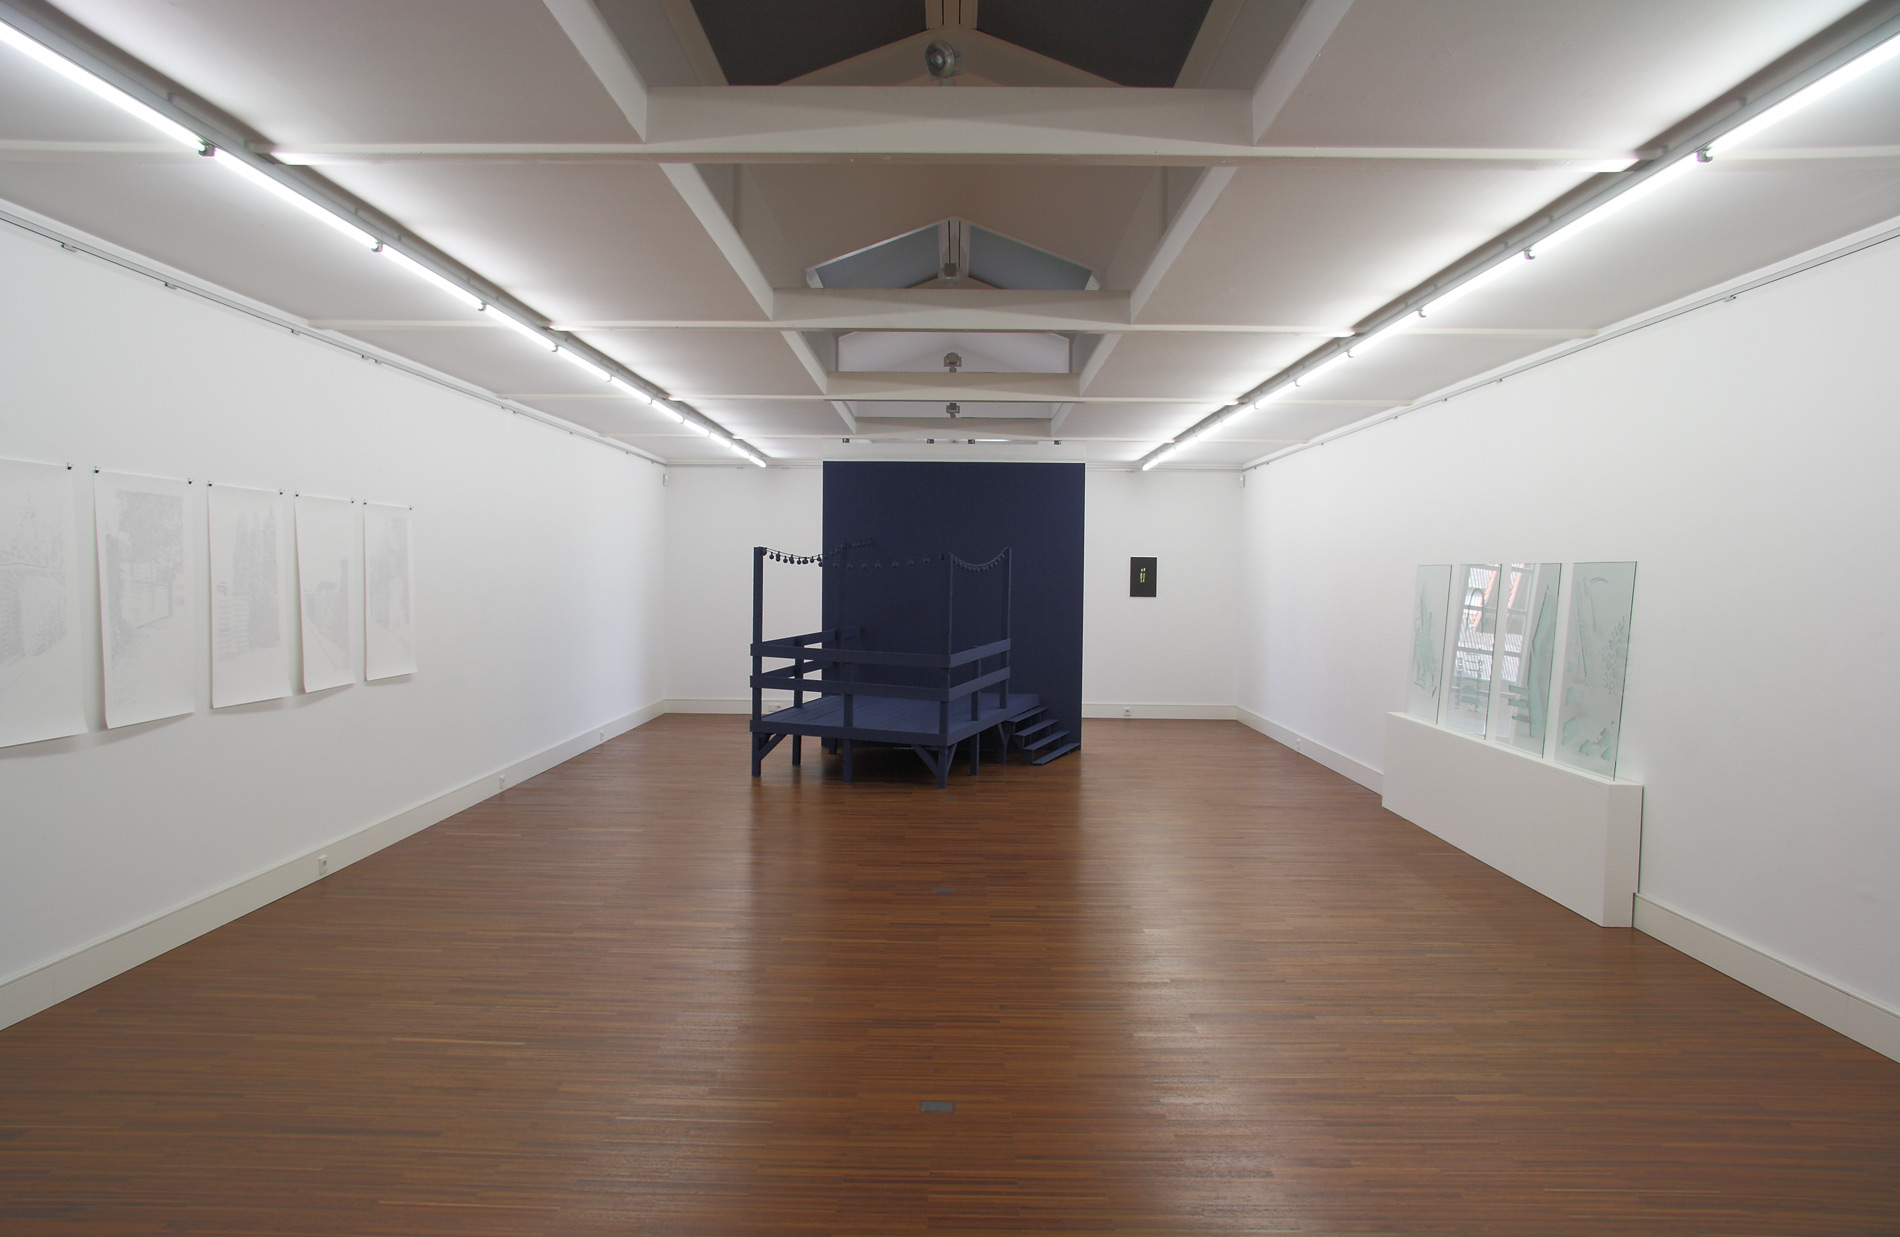 Michael Göbel - Ausstellung "Inseln" - Kunsthalle Willingshausen, 2010